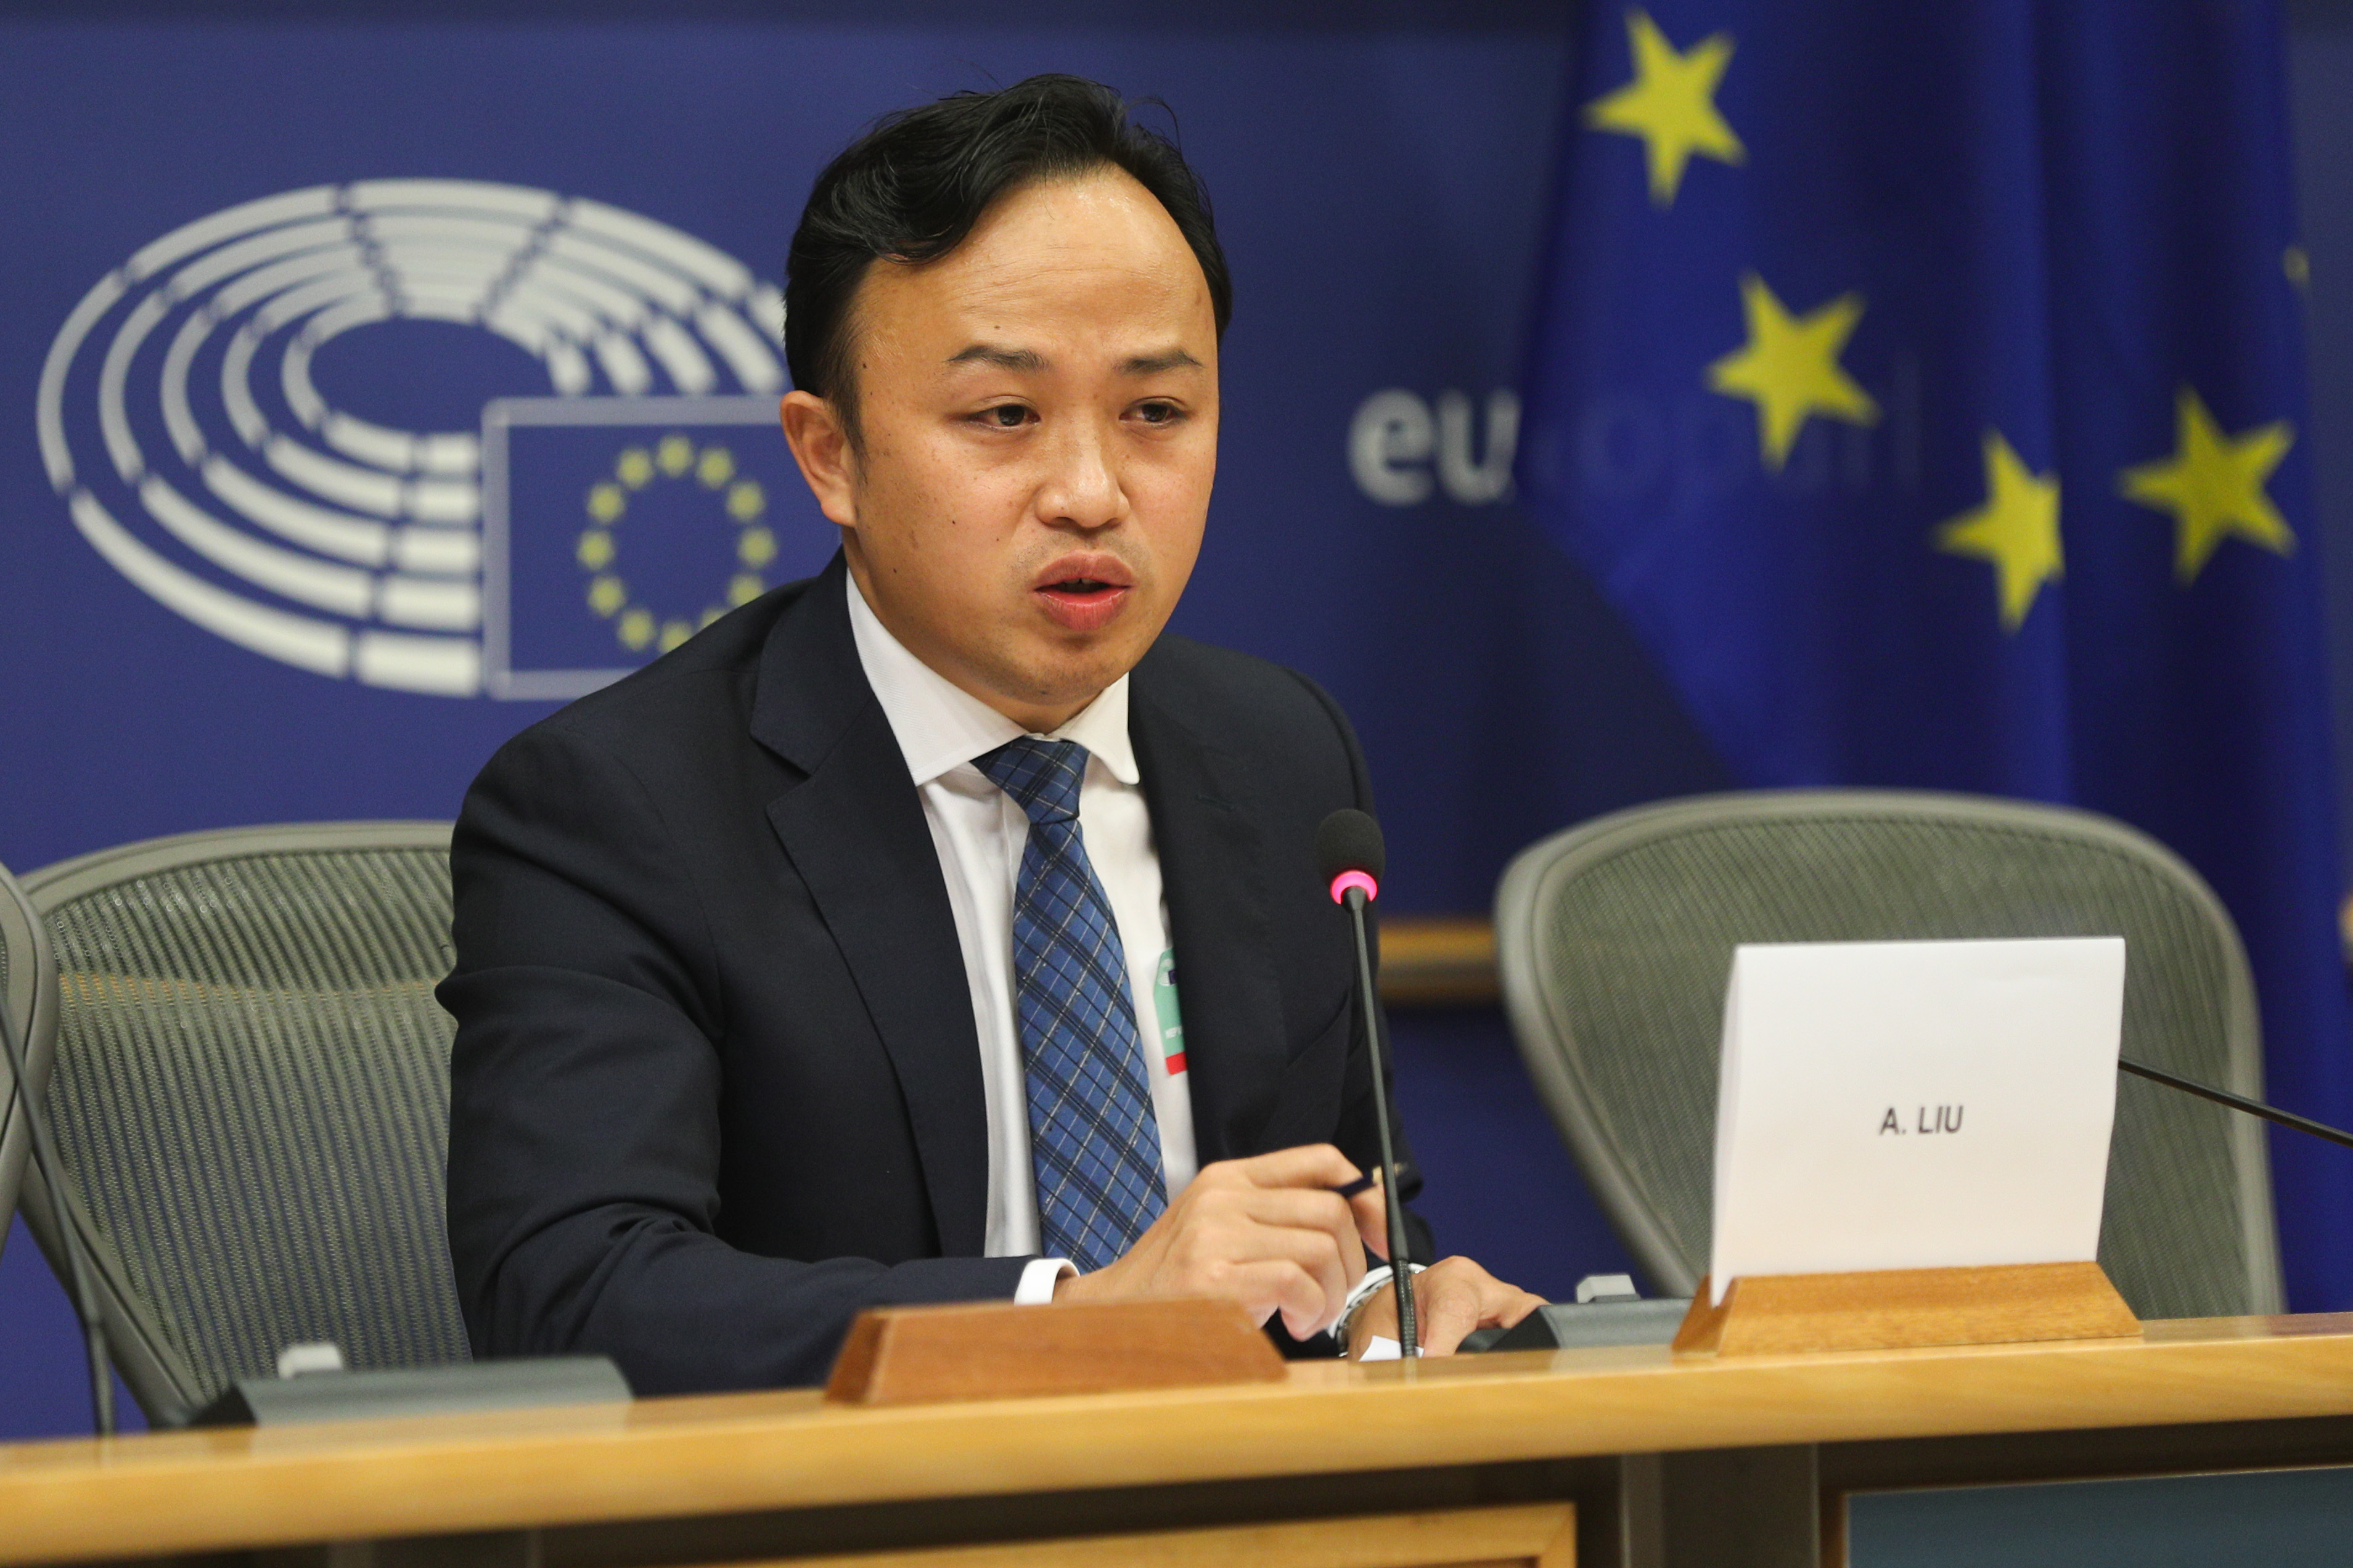 BRUSSELS, Oct. 19, 2019 (Xinhua) -- Abraham Liu, Huawei's chief representative to the EU, attends the debate organized by the European Parliament in Brussels, Belgium